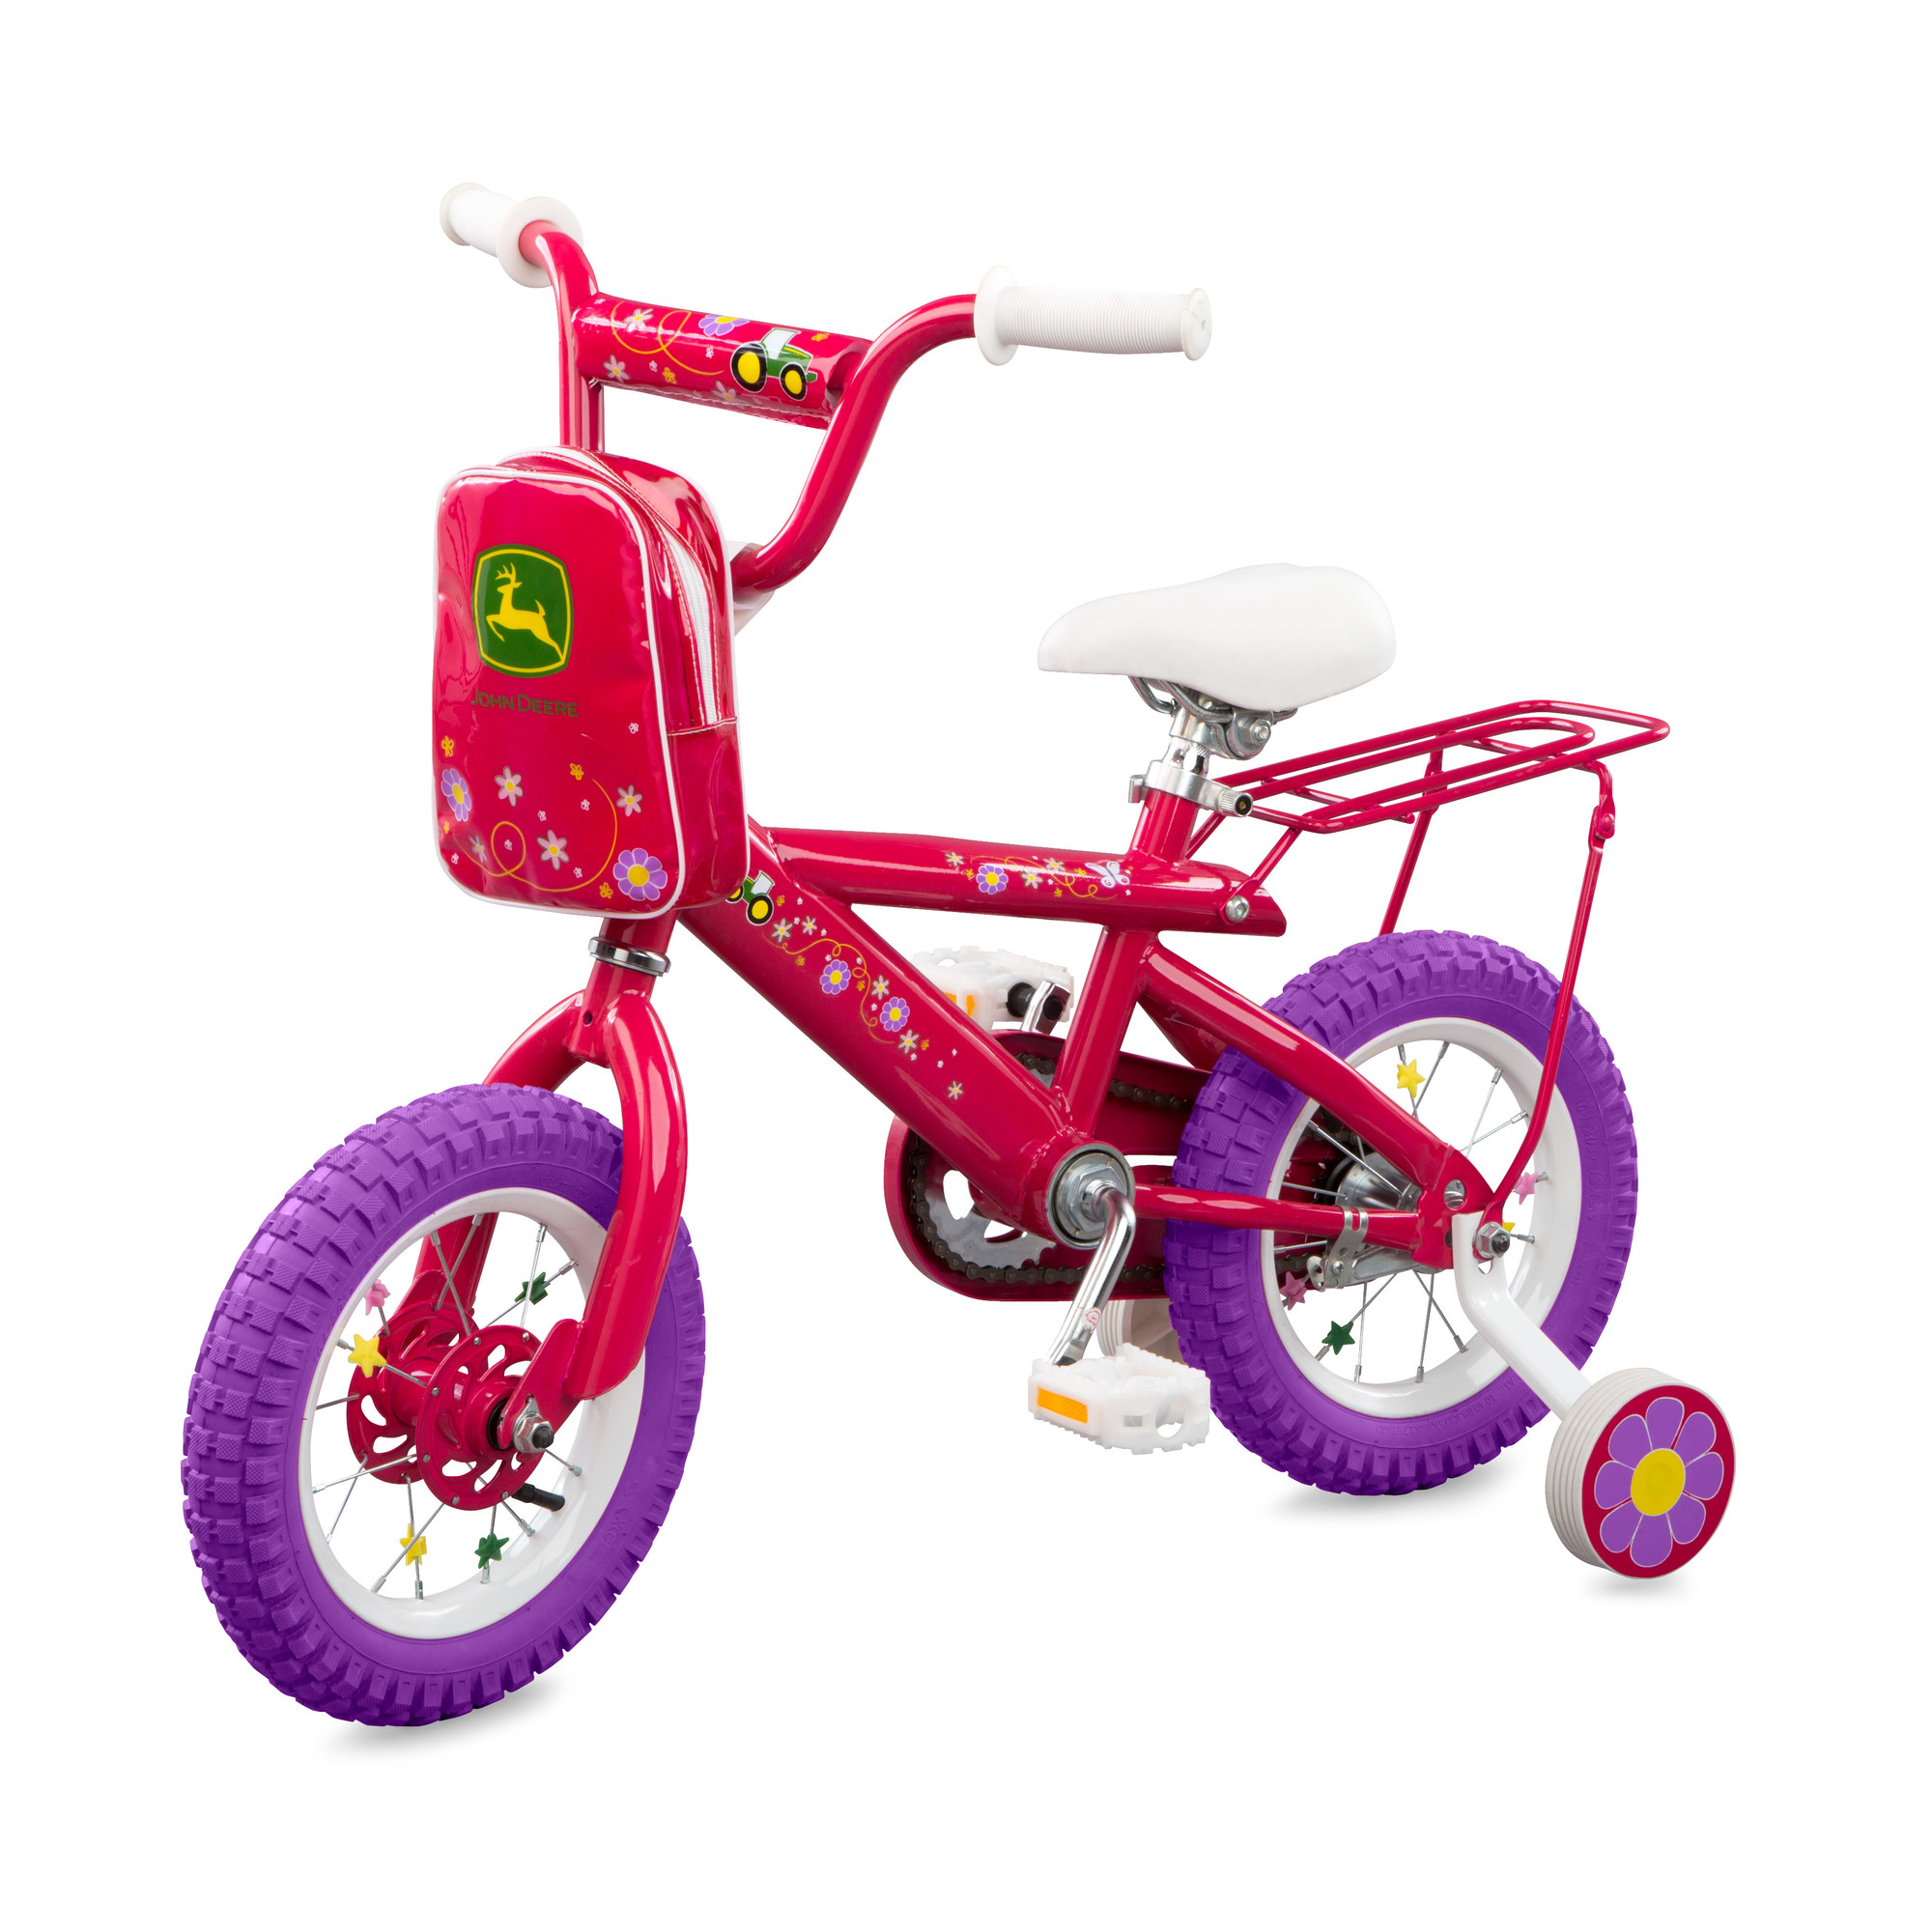 John Deere 12" Girls Bike Kids Bike with Training Wheels Pink